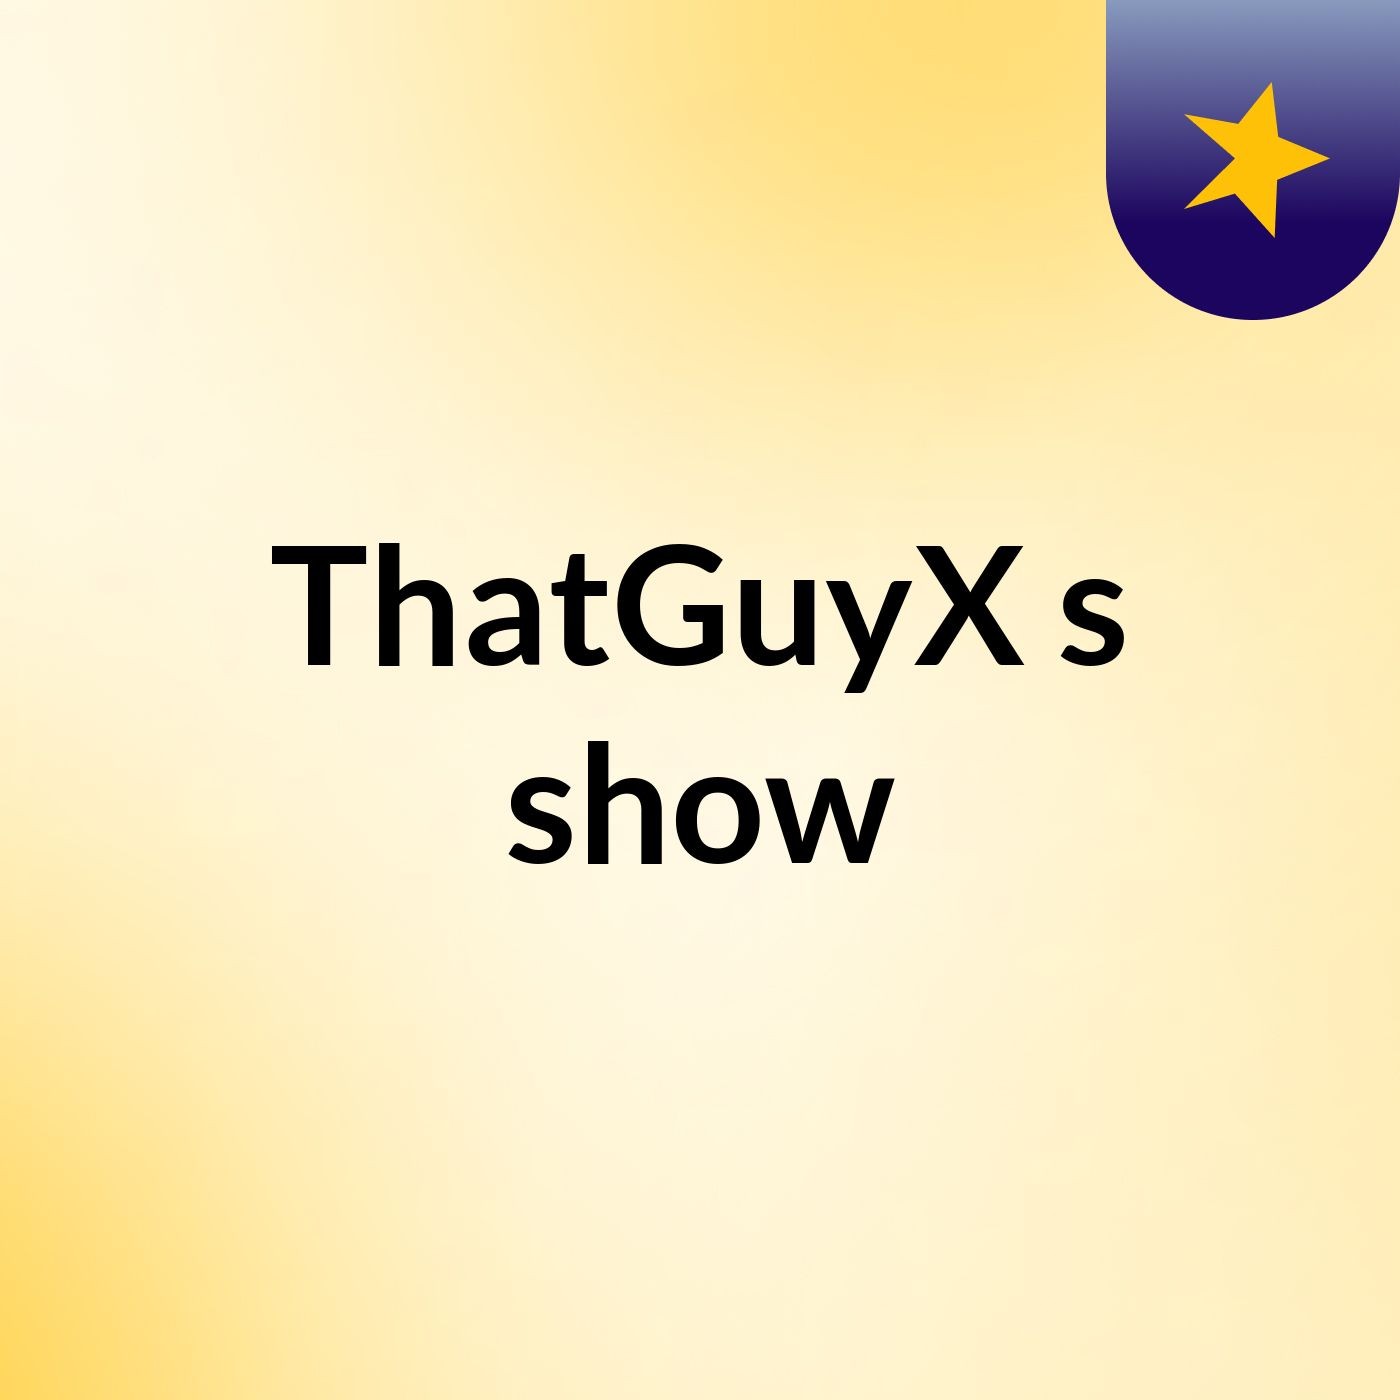 ThatGuyX's show